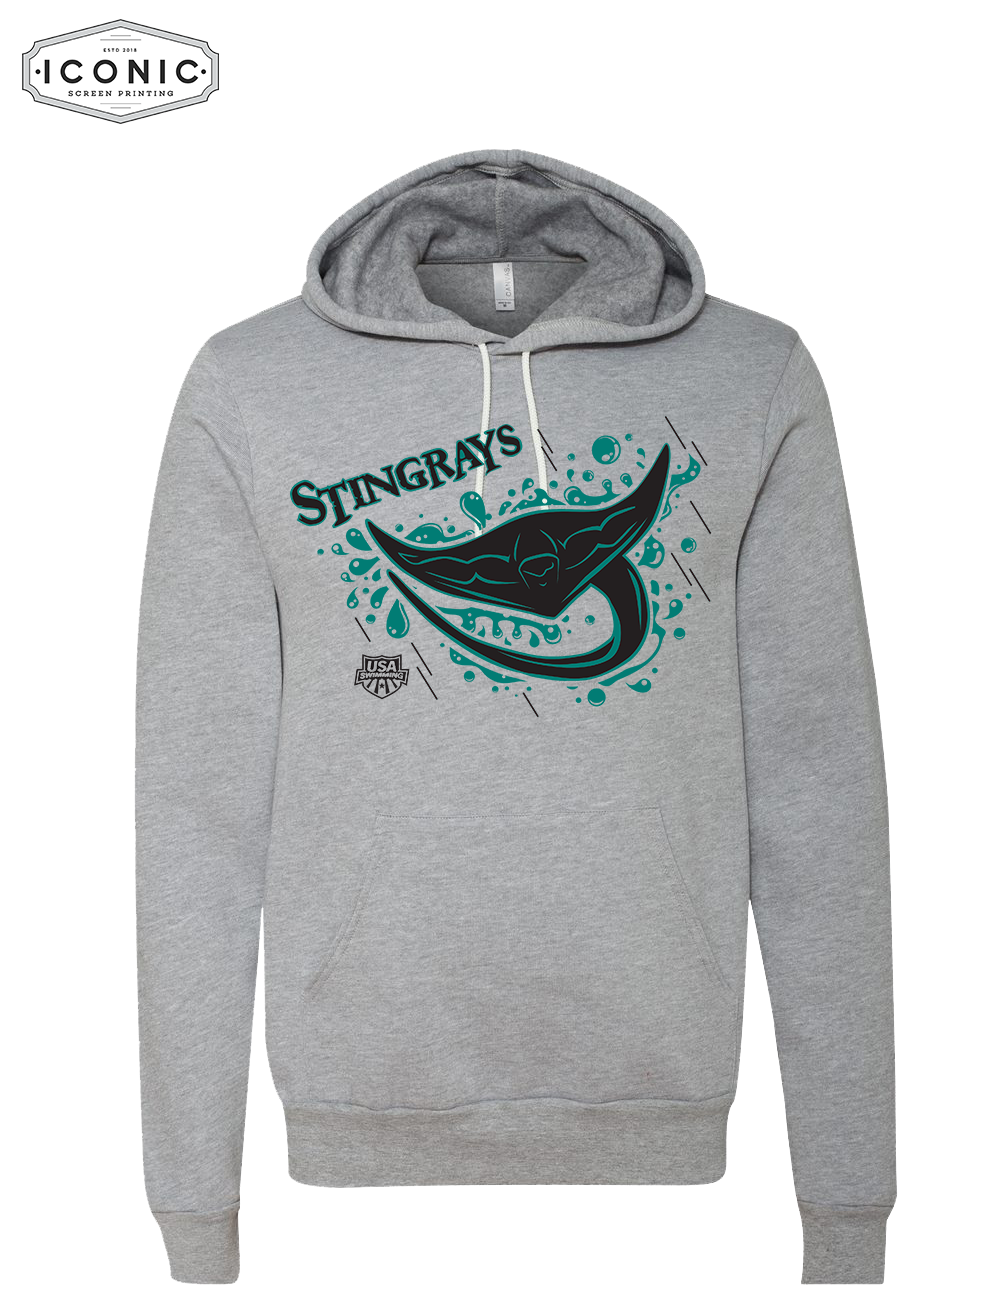 Stingrays - Unisex Sponge Fleece Hoodie